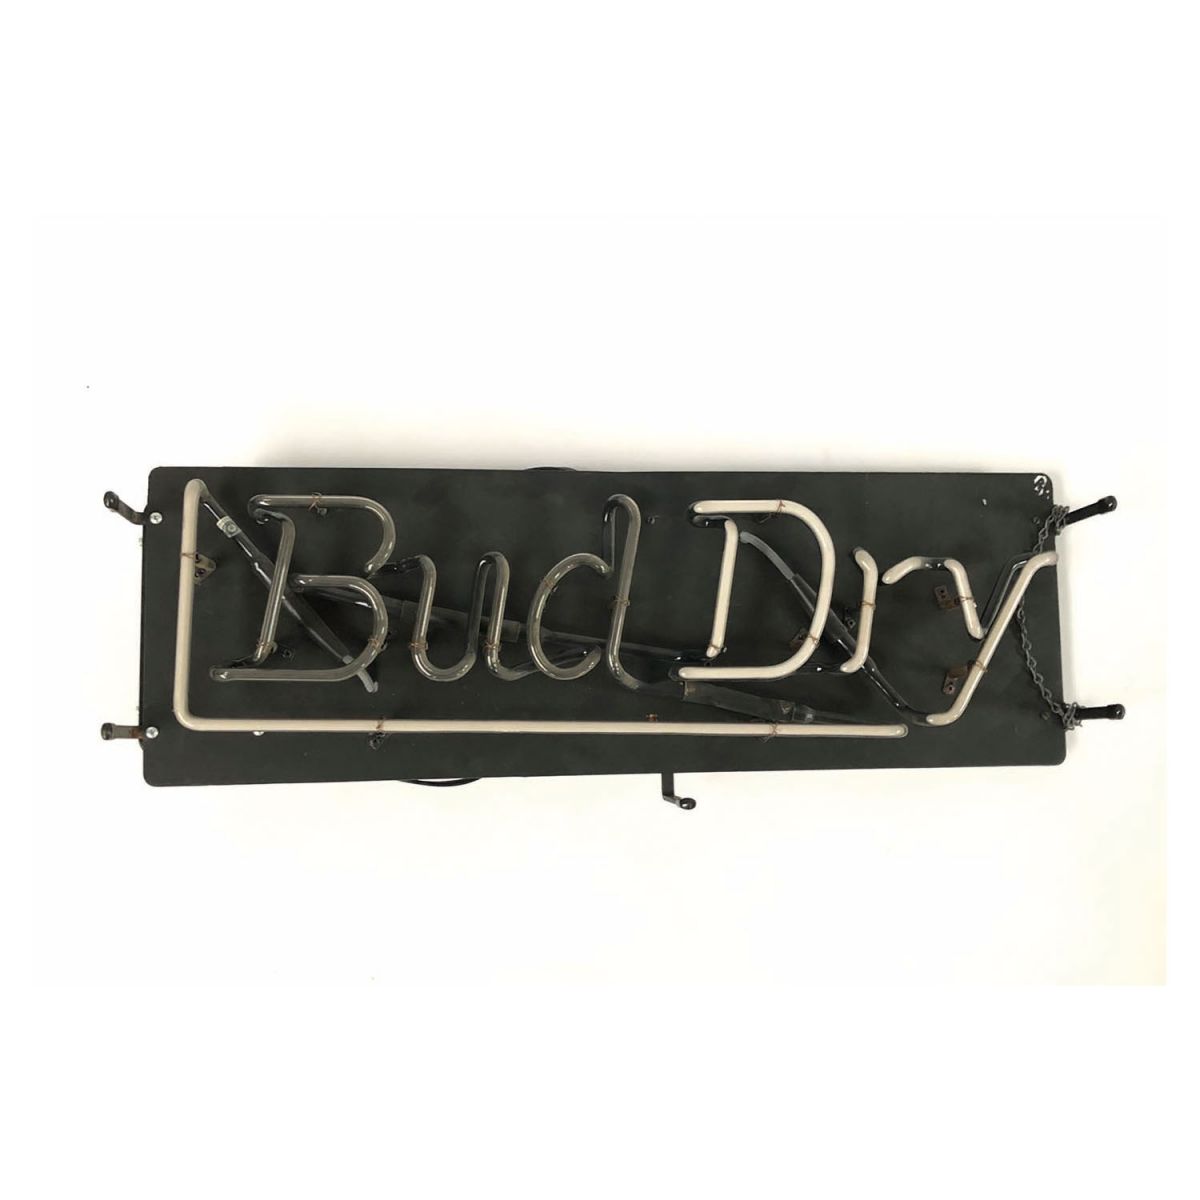 Original Bud Dry Neon Sign